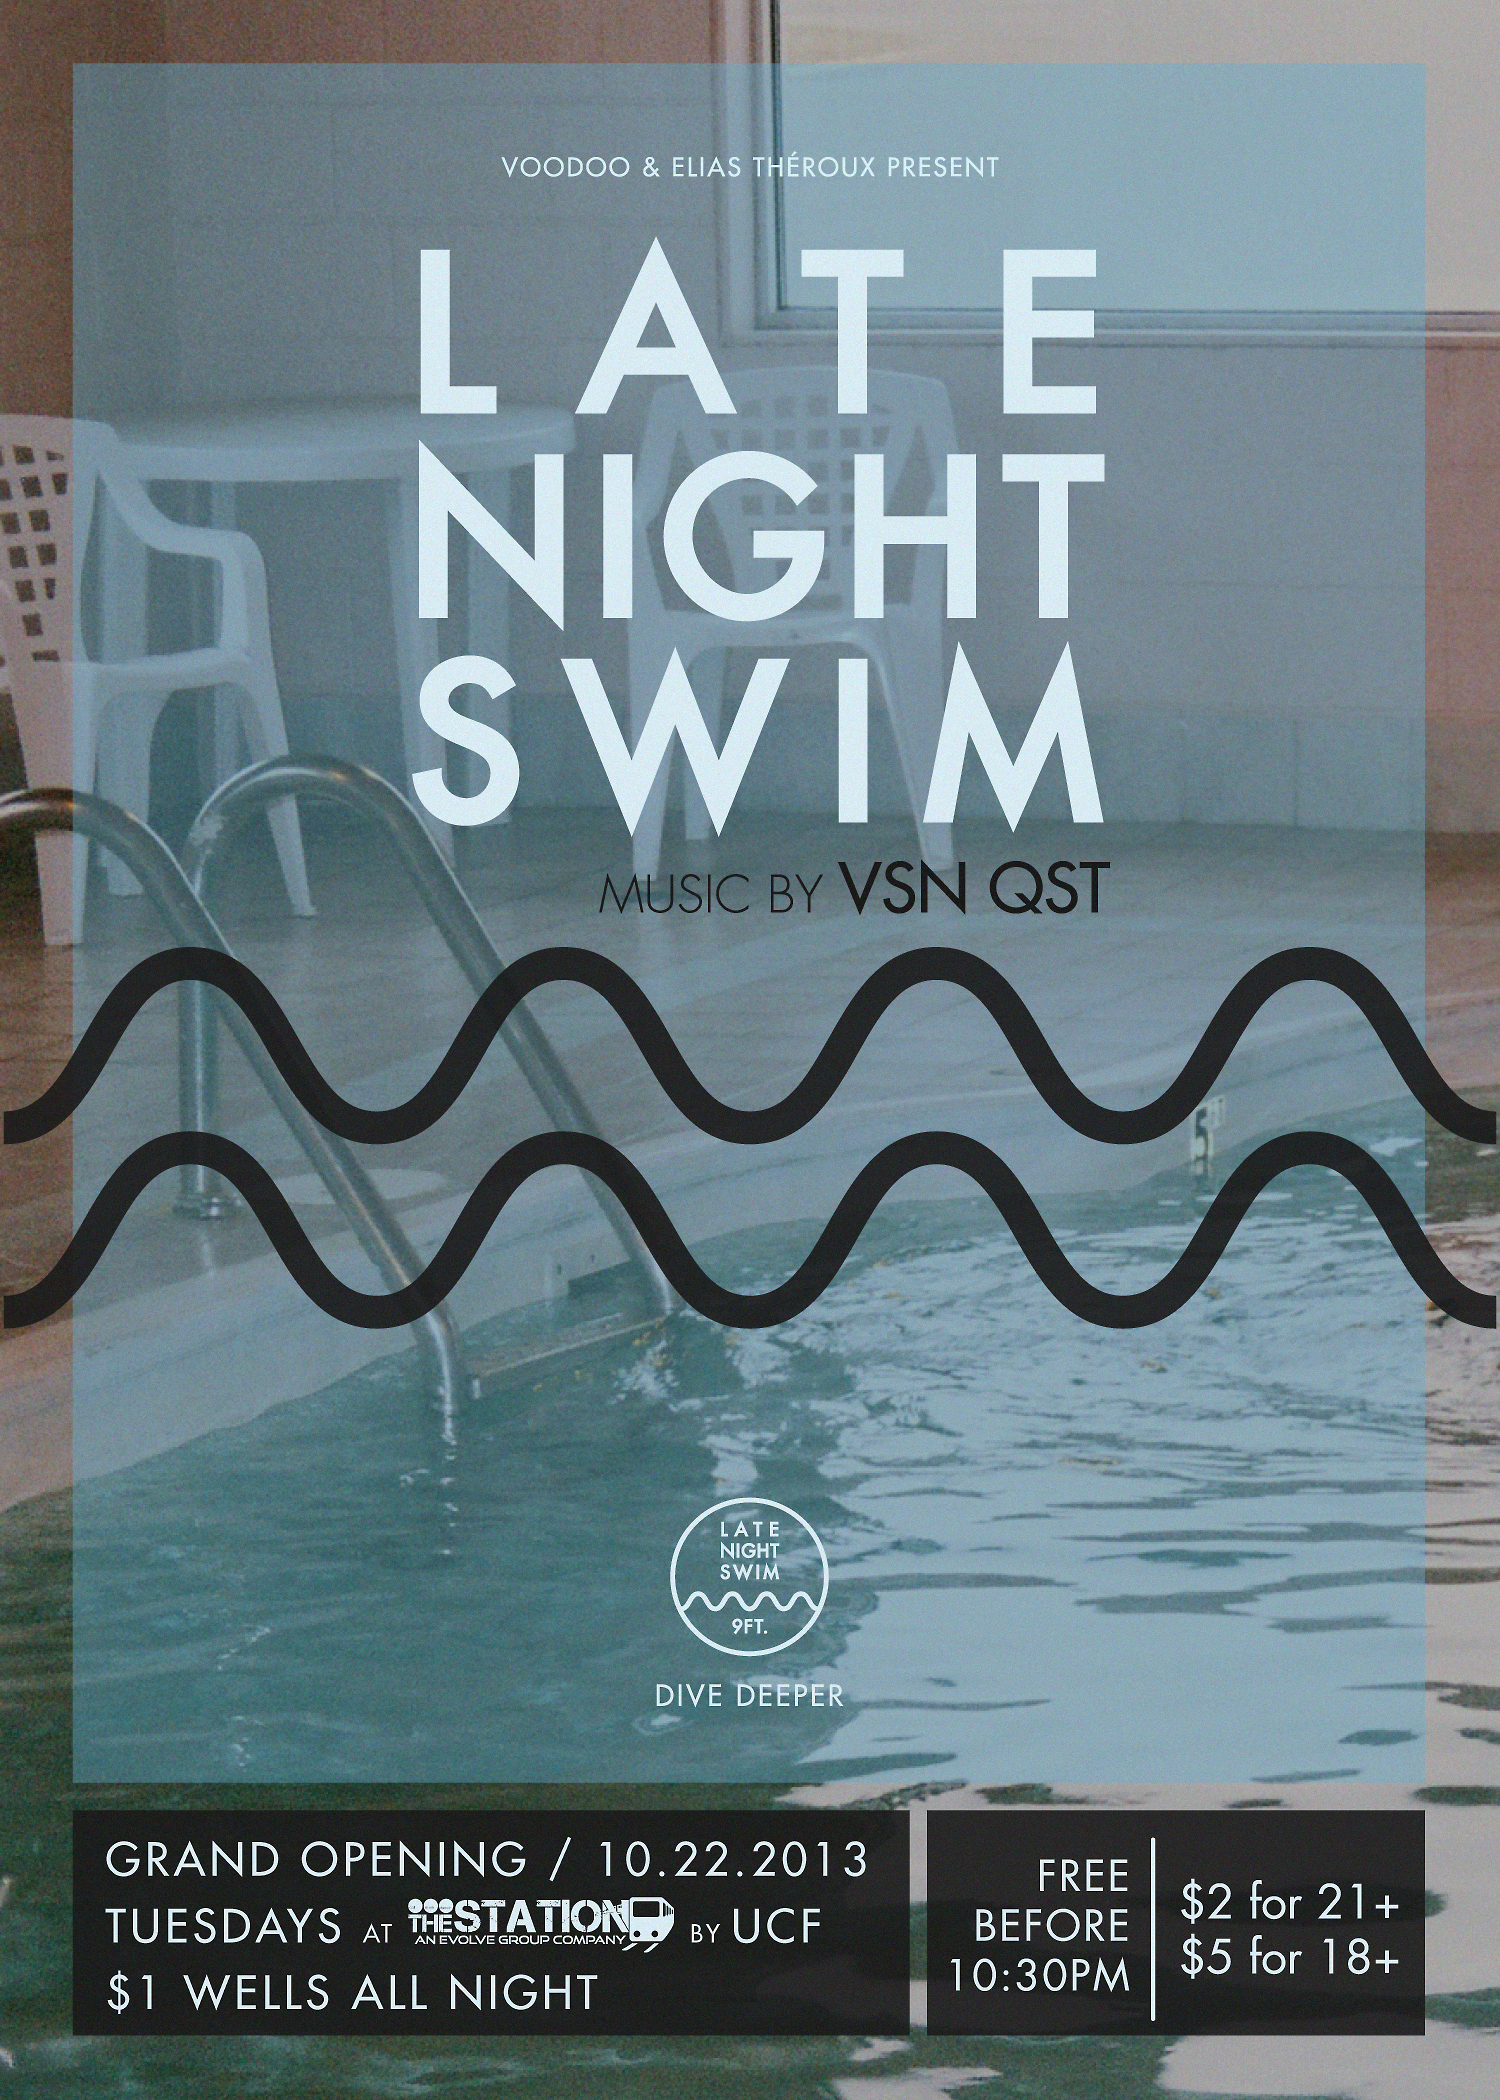 the night swim